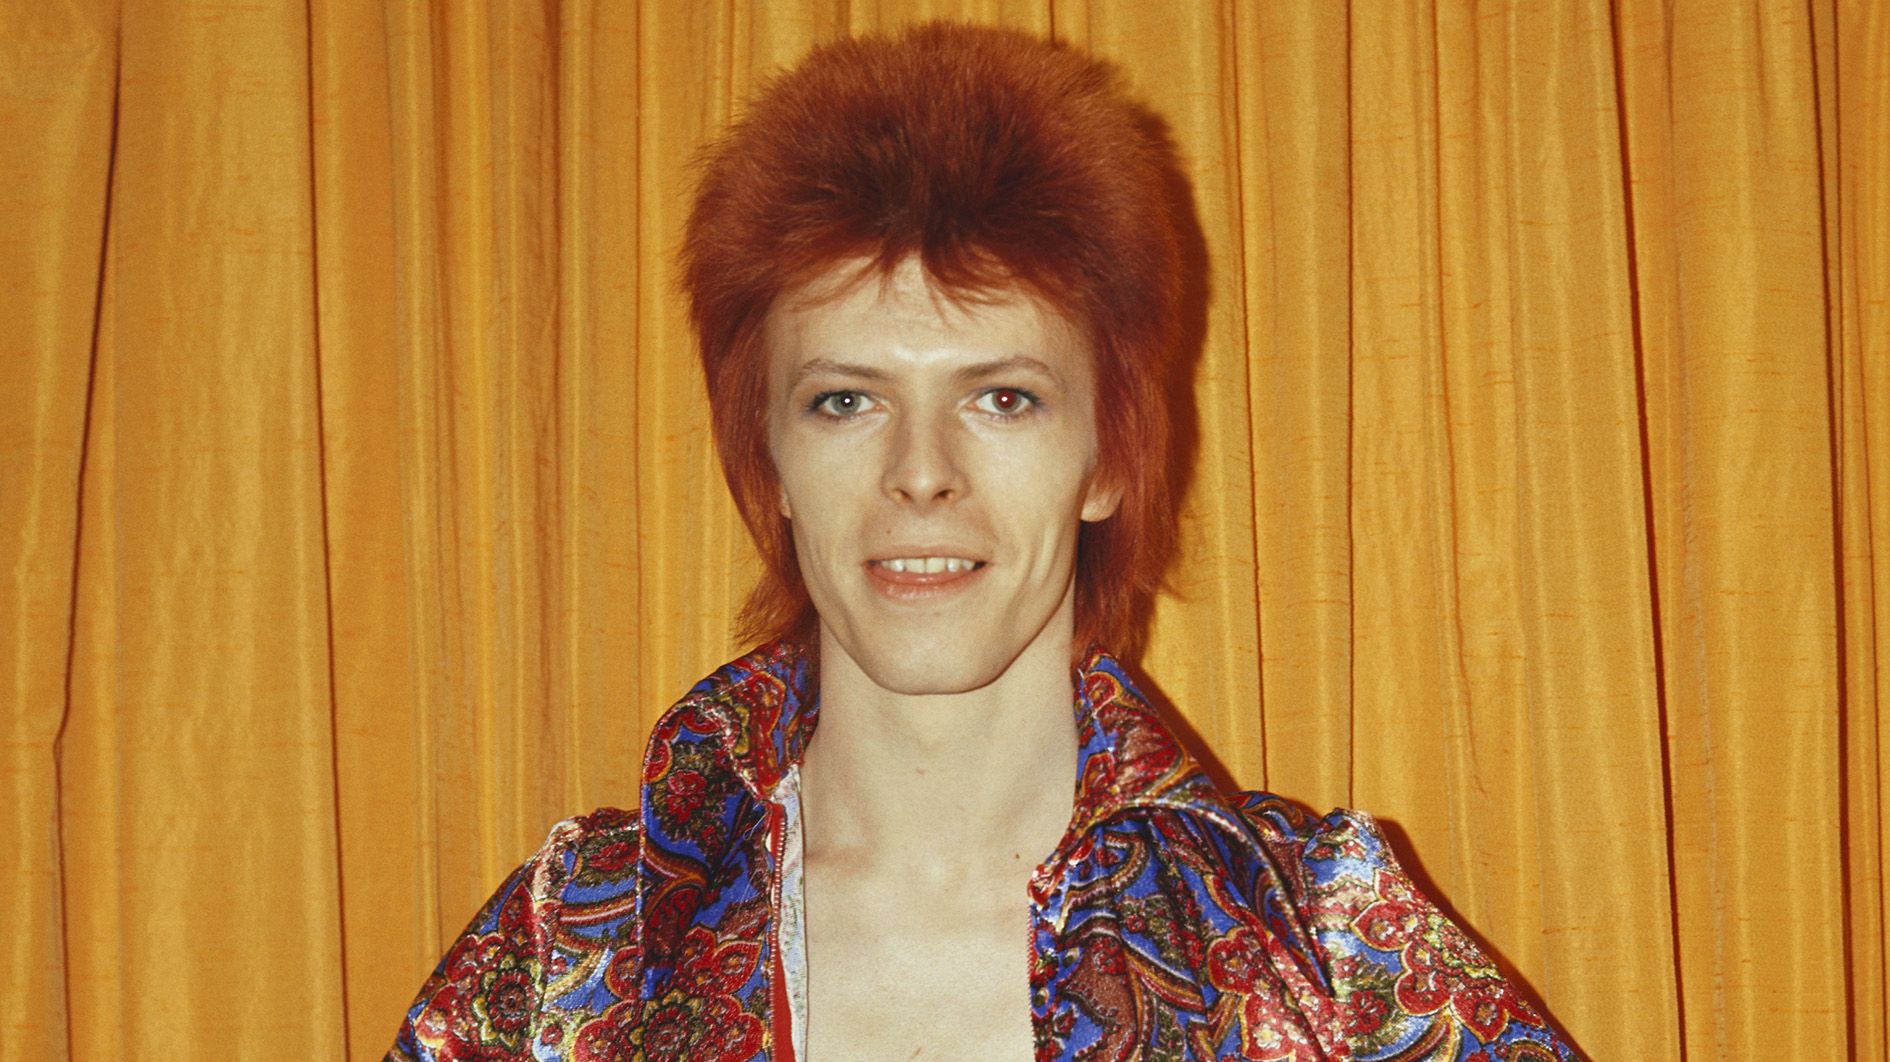 David Bowie's 'Ziggy Stardust' album gets 50th anniversary re-release